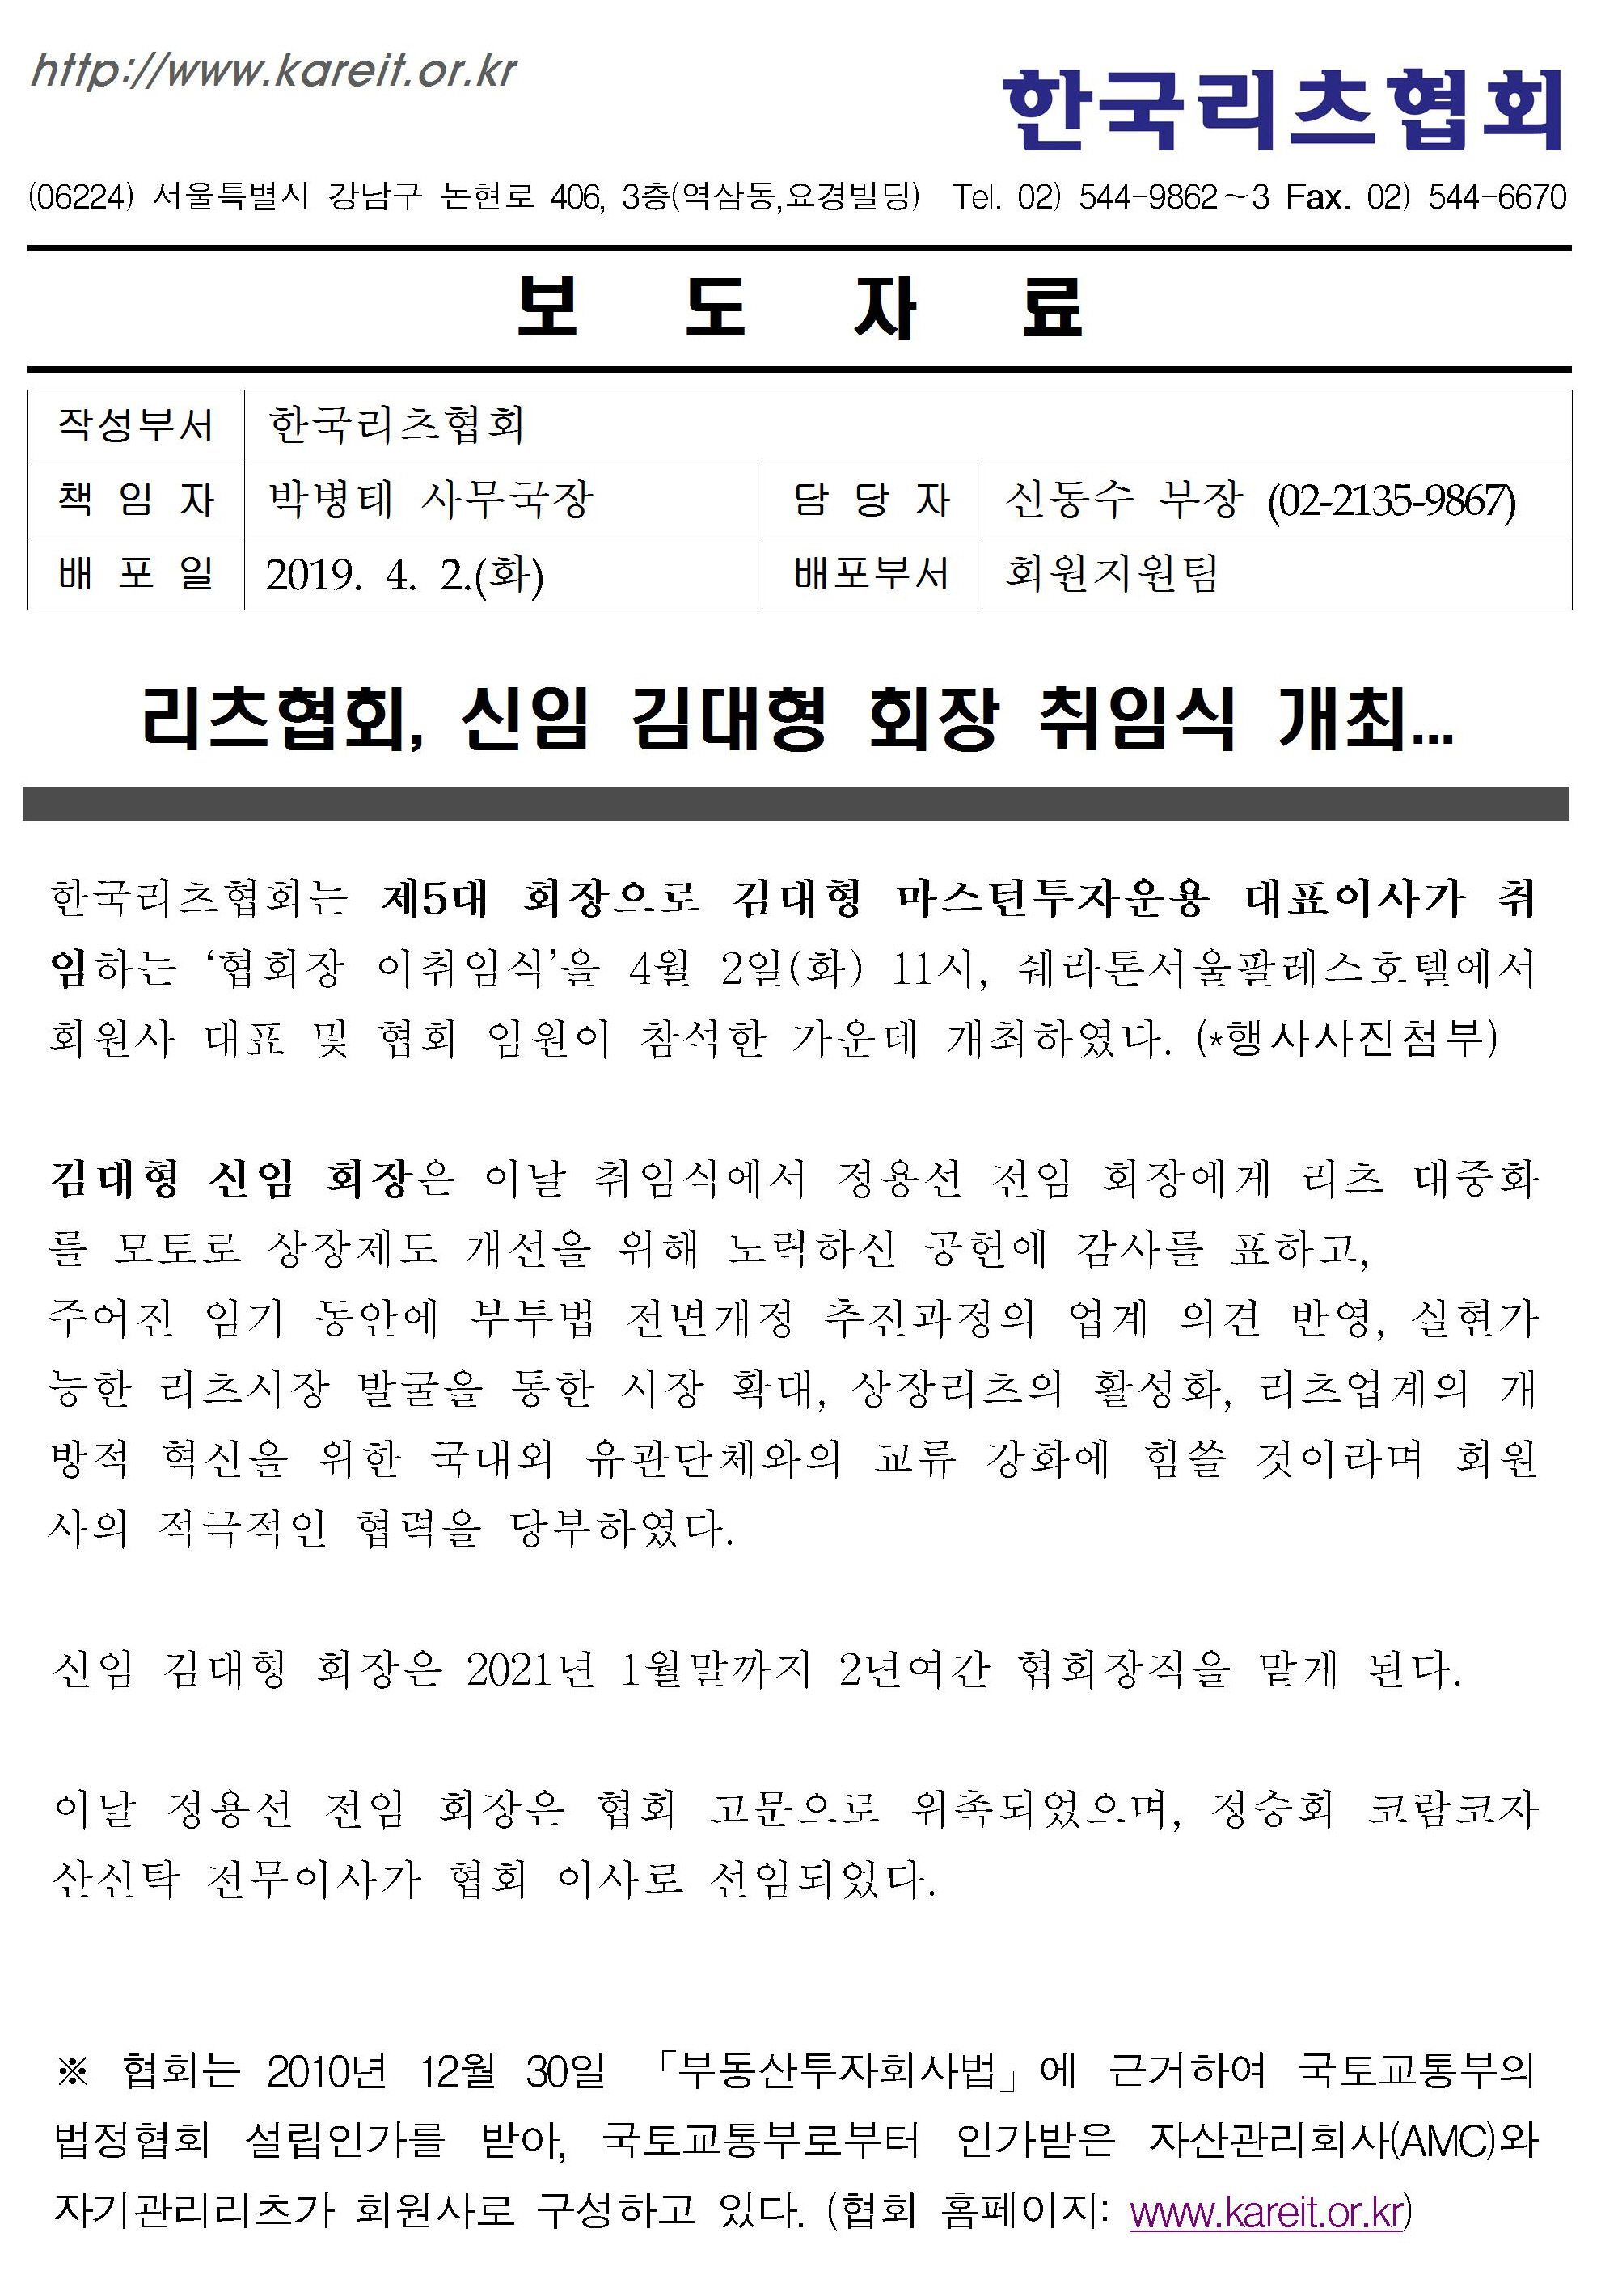 KAREIT보도자료(20190402) -리츠협회, 신임 김대형 회장 취임식 개최1.jpg